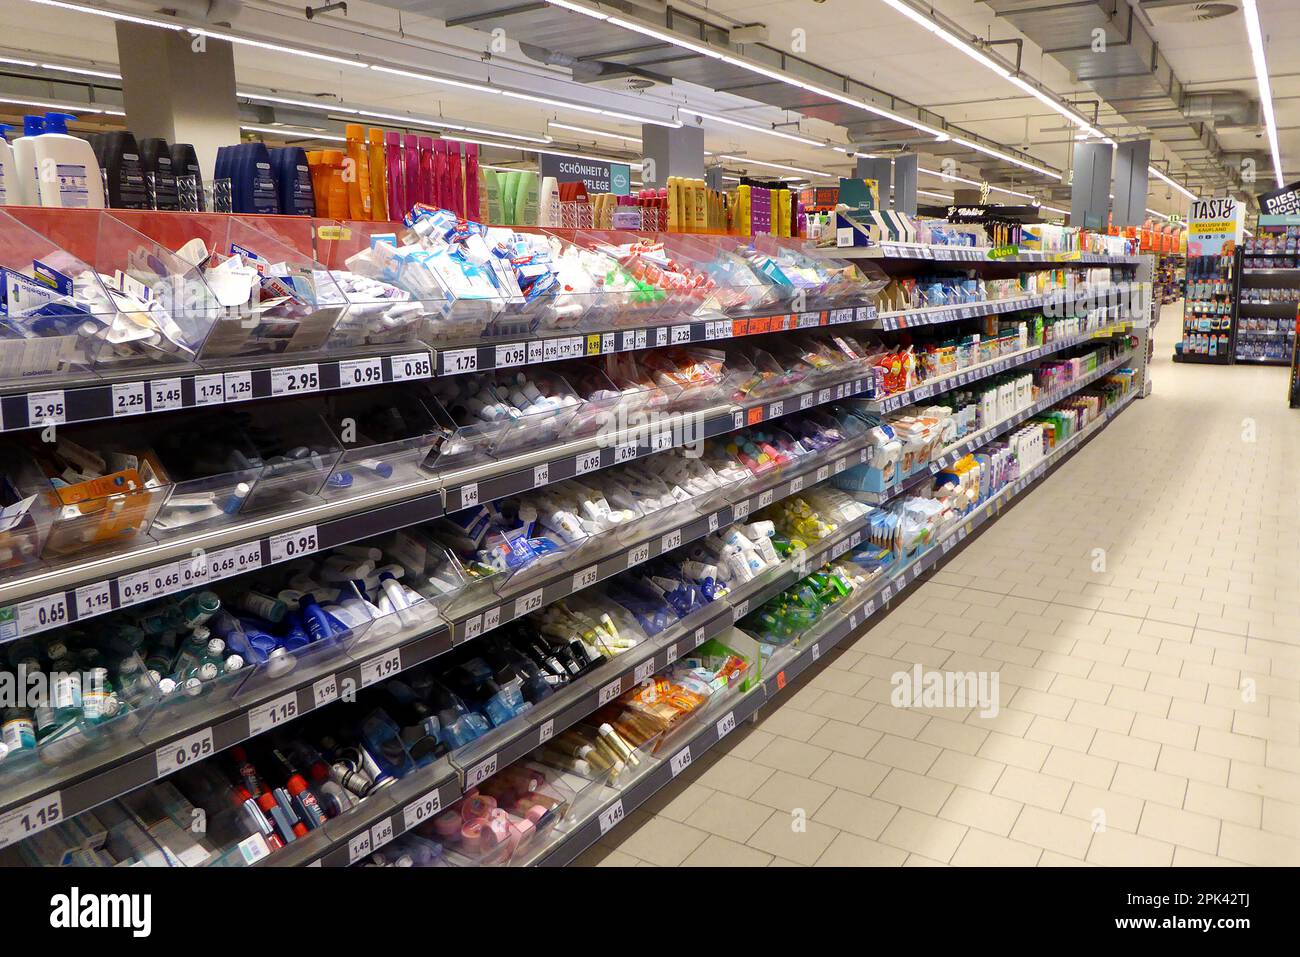 Regale im Supermarkt / Regale im Supermarkt Stockfoto